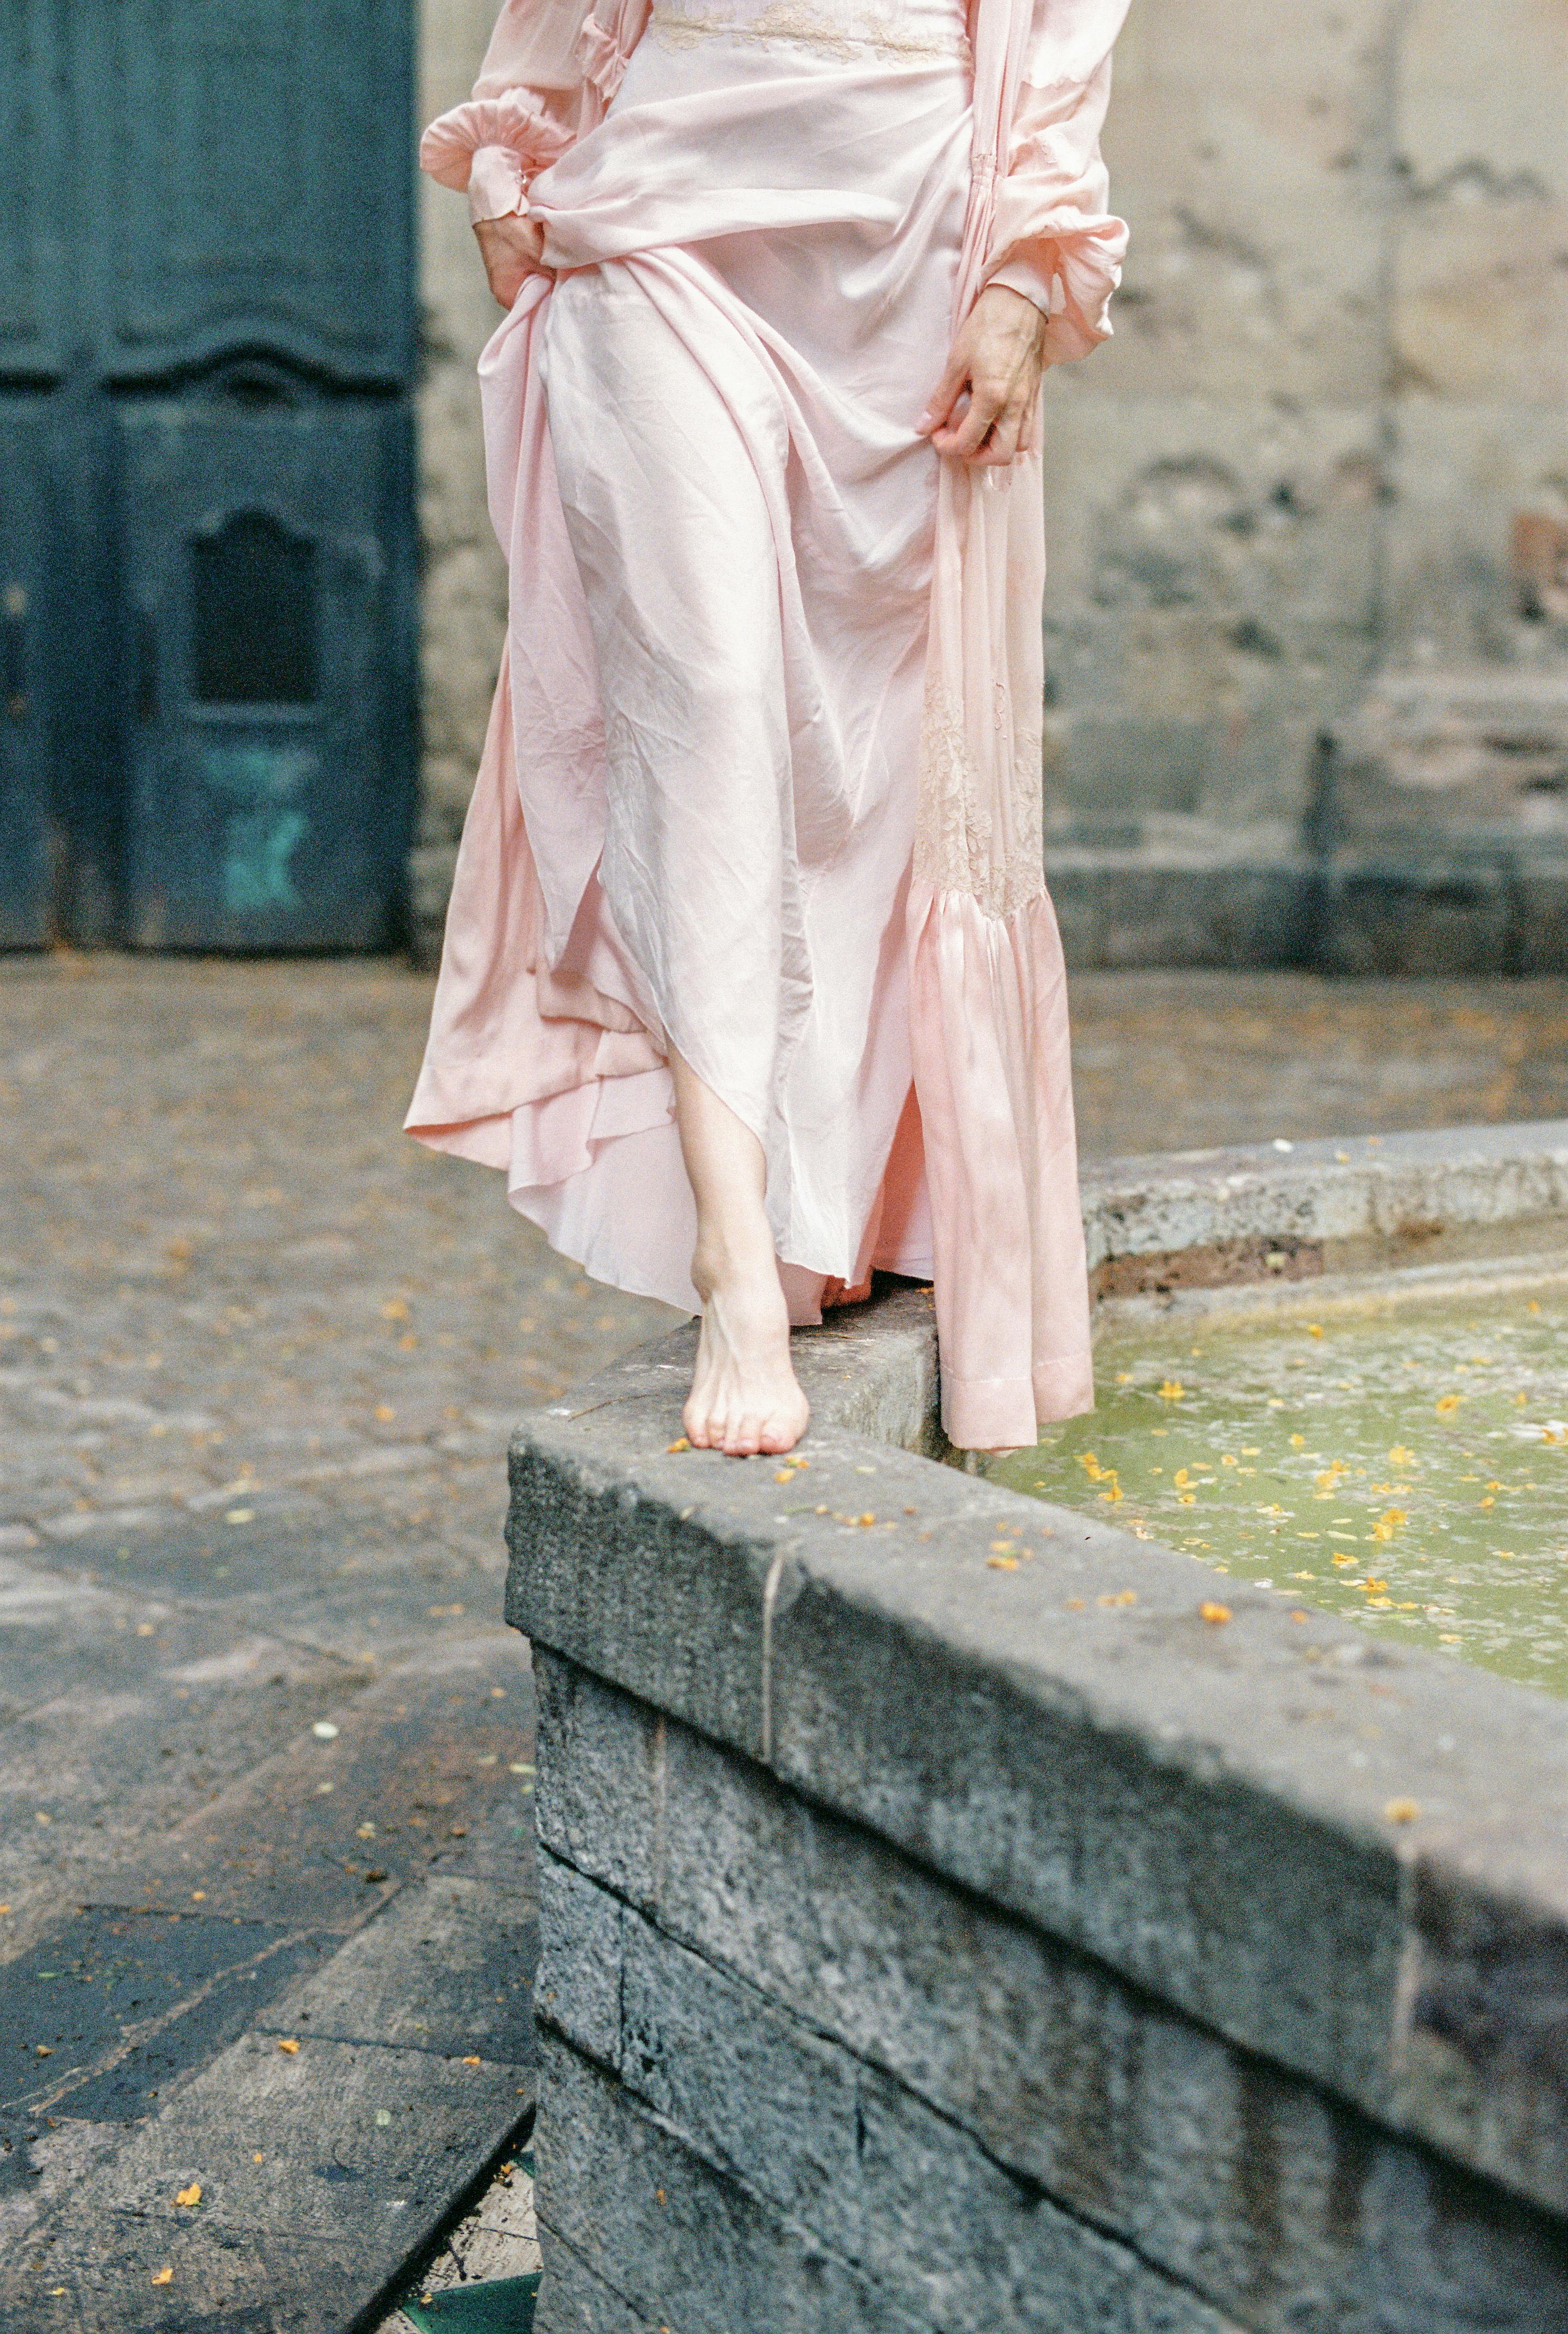 woman in pink dress standing on gray concrete floor